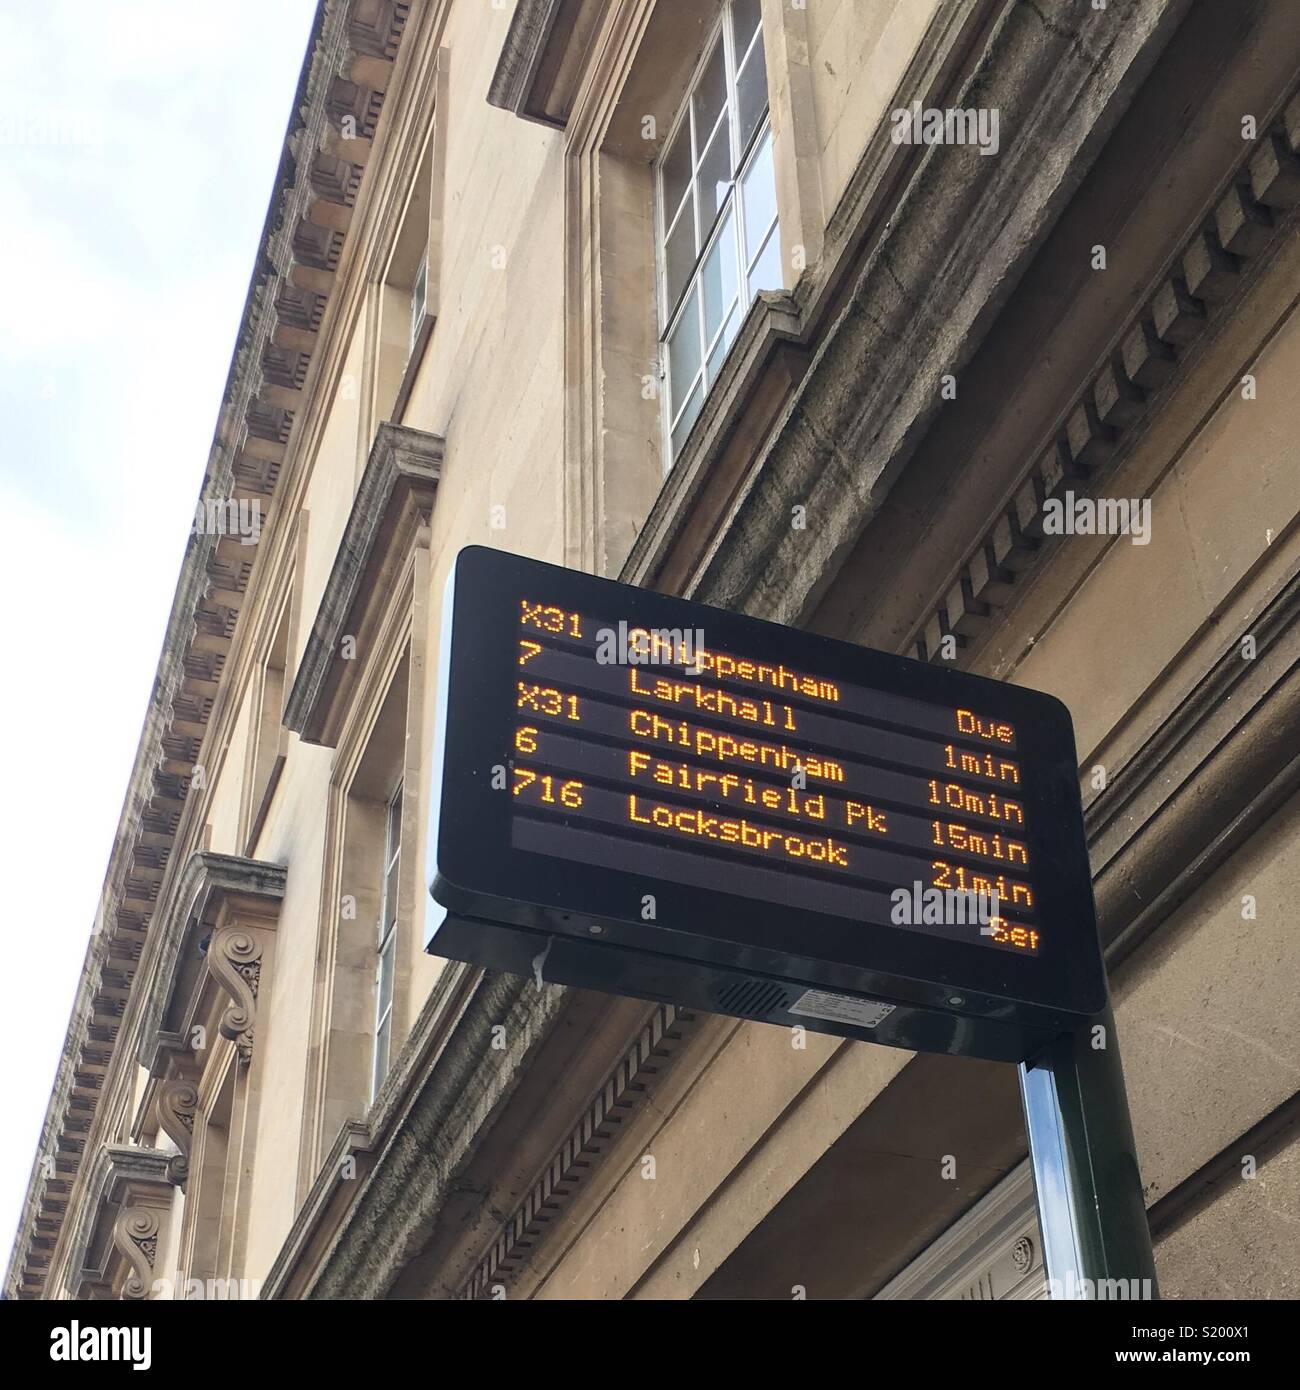 Live bus updates in Bath city centre Stock Photo